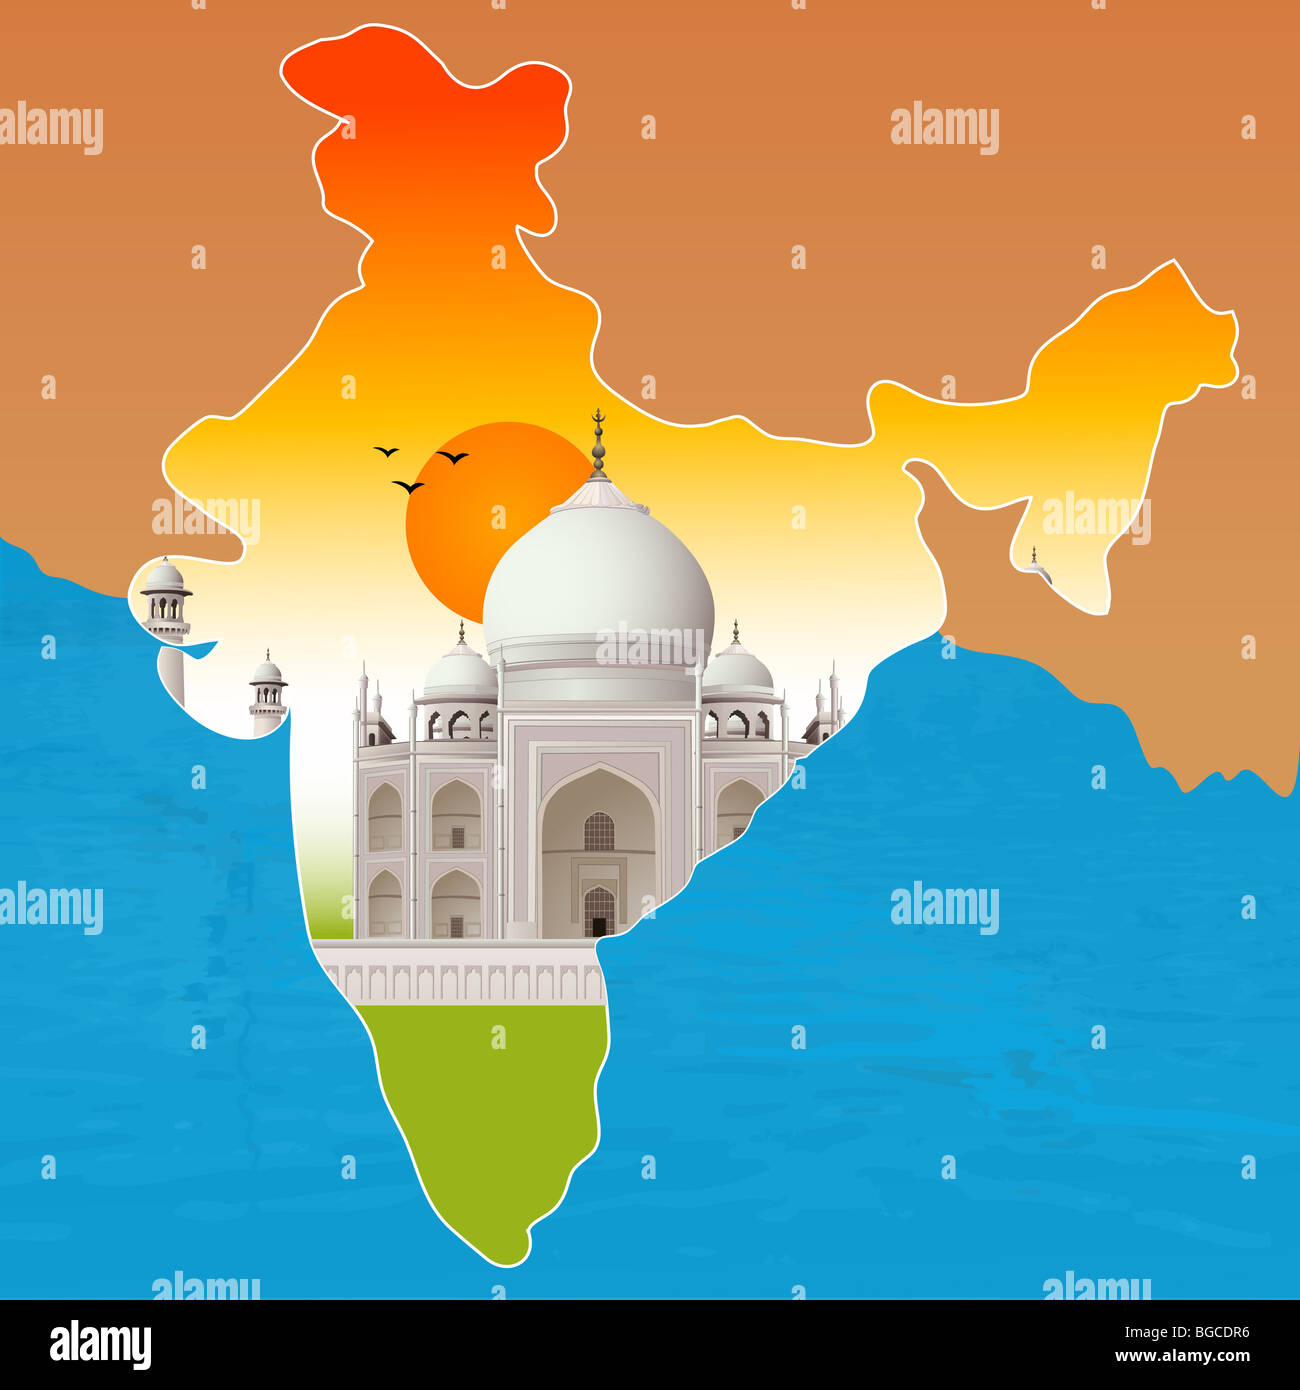 Taj Mahal, agra, outline map of india Stock Photo